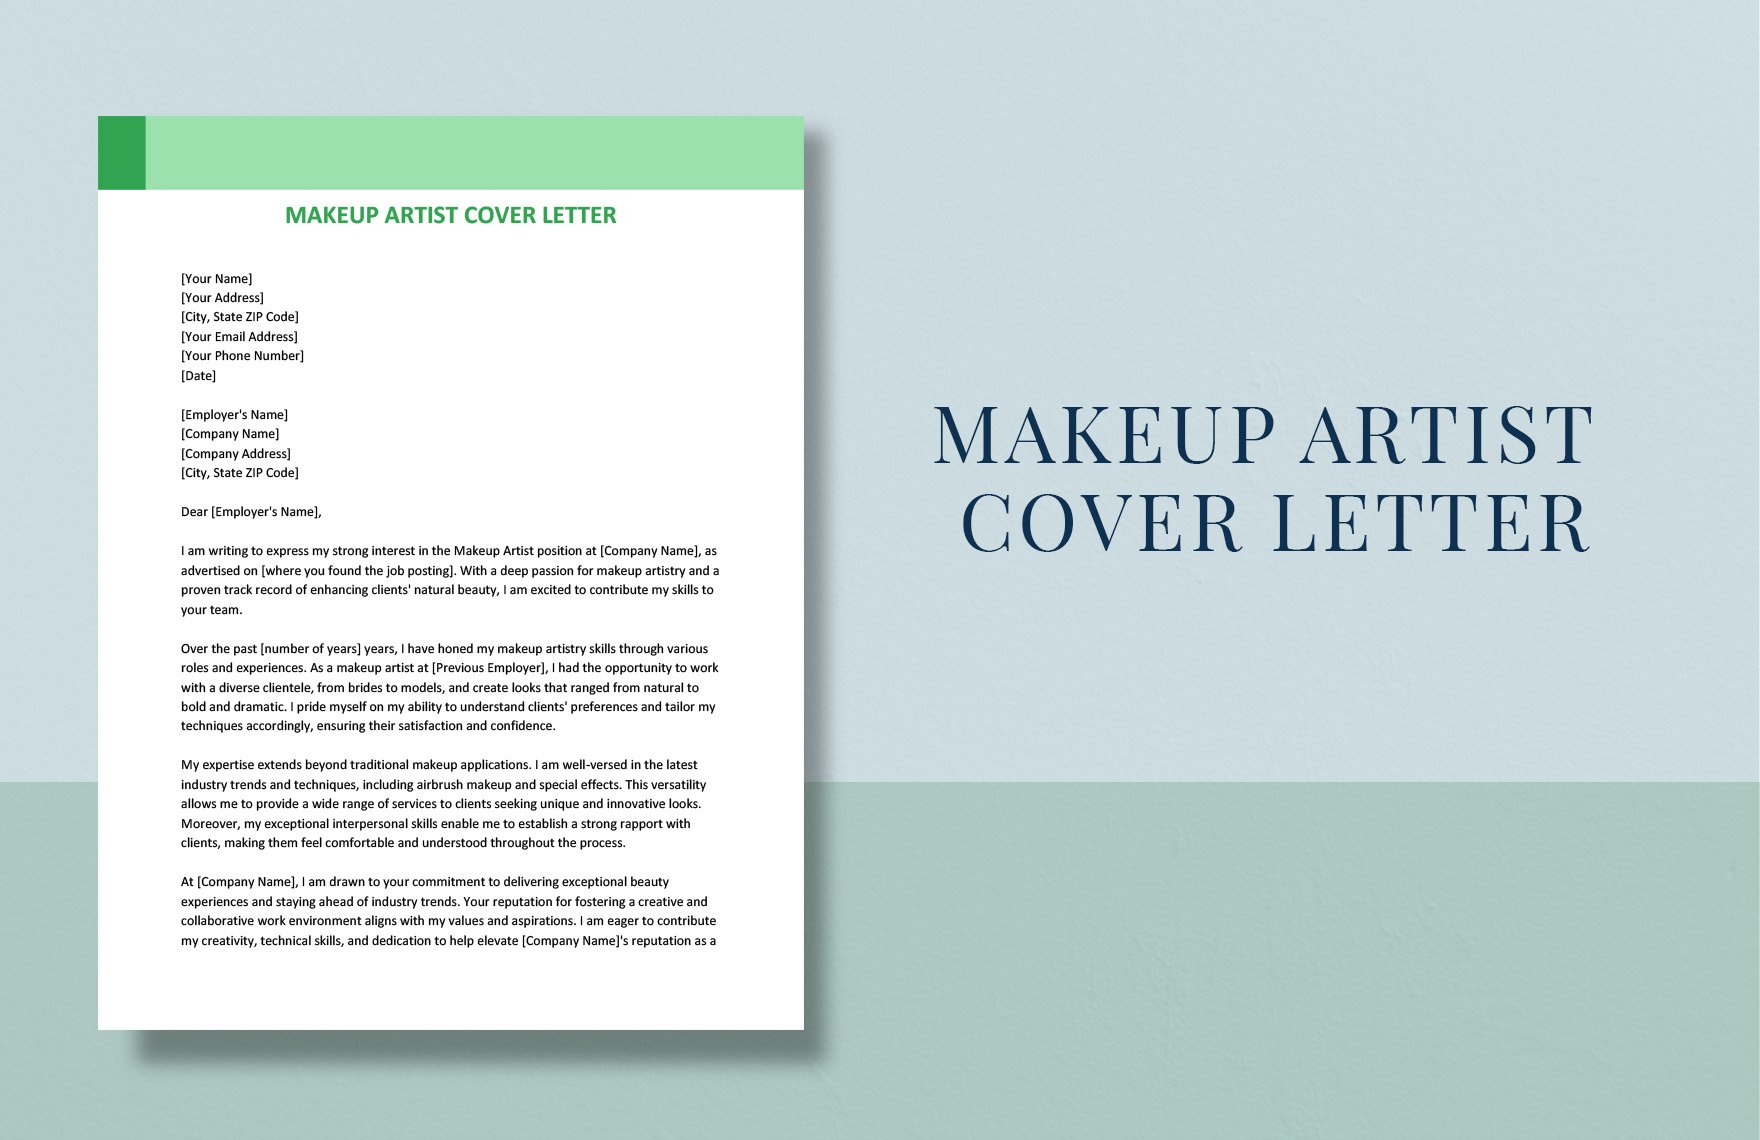 Makeup Artist Cover Letter in Word, Google Docs